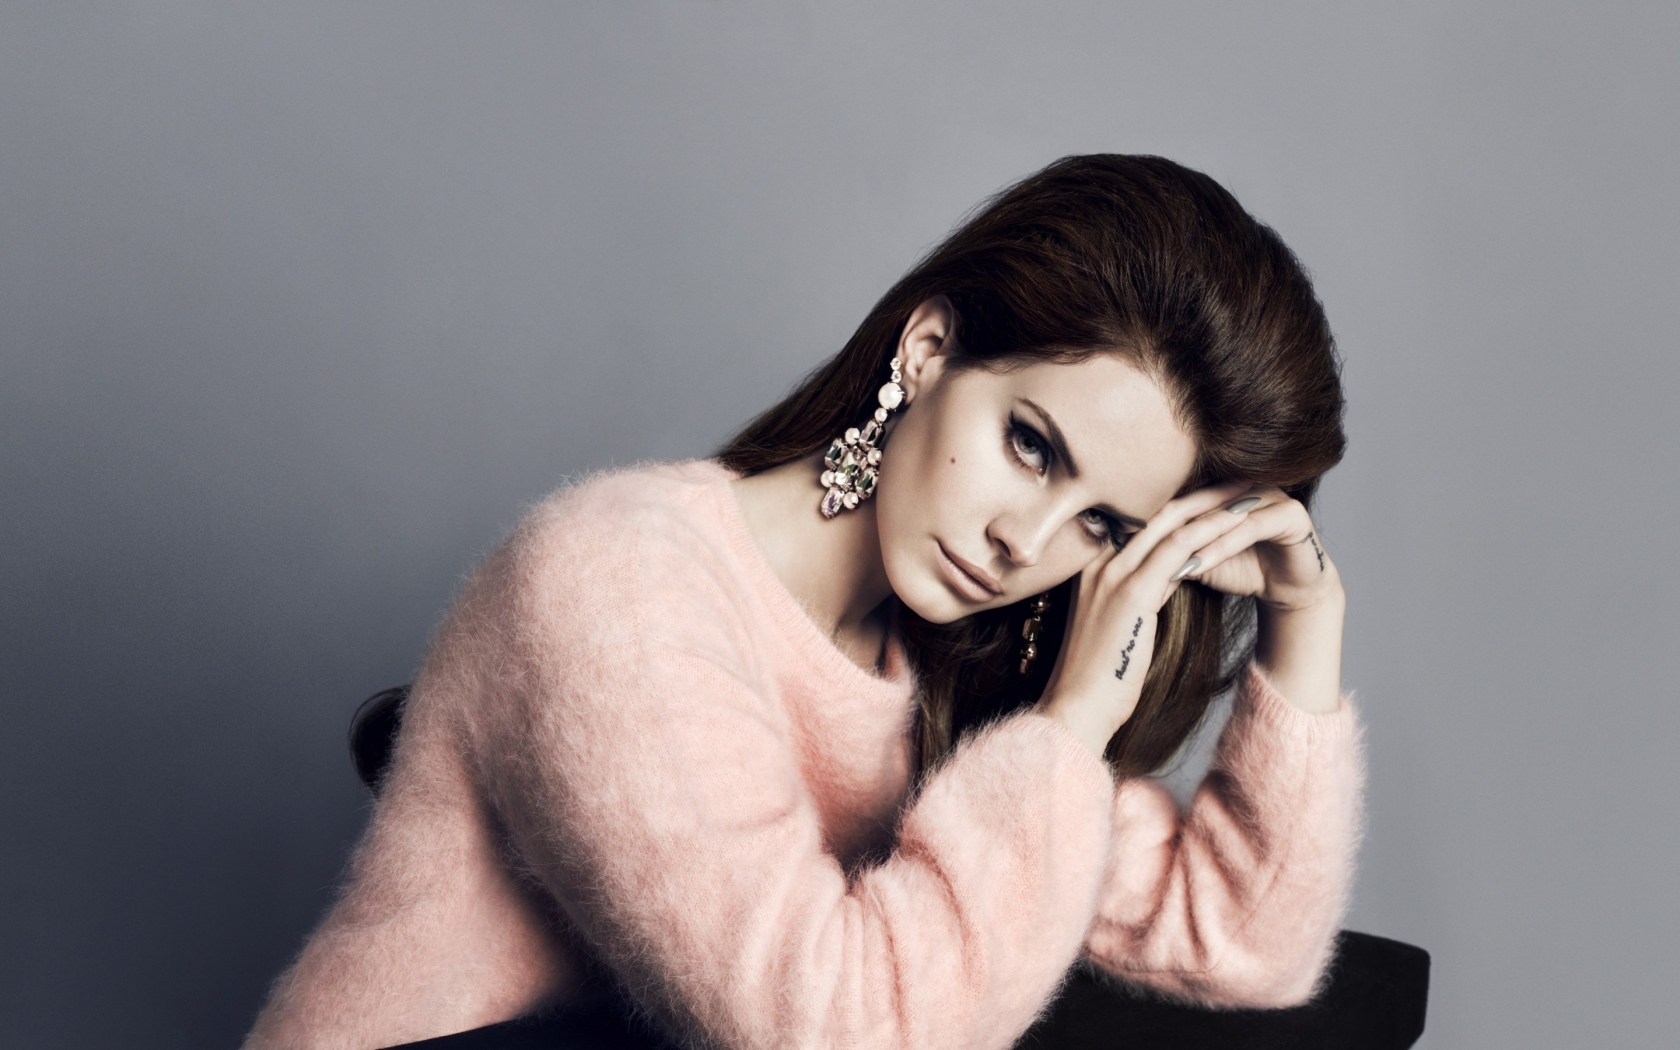 Beautiful Lana Del Rey for 1680 x 1050 widescreen resolution